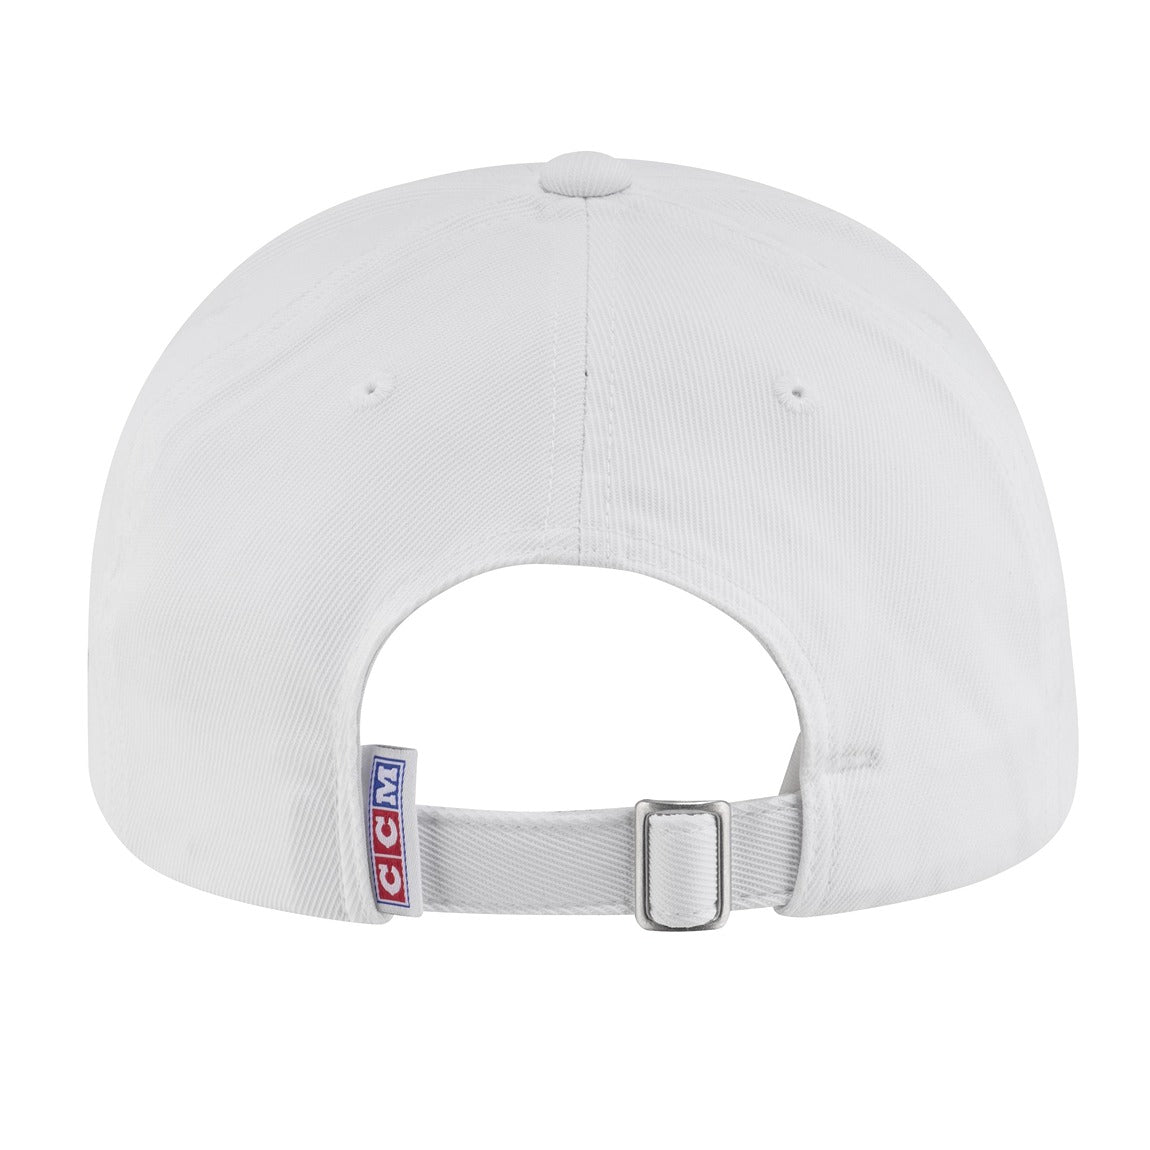 CCM Monochrome Structured Adjustable Cap (White)